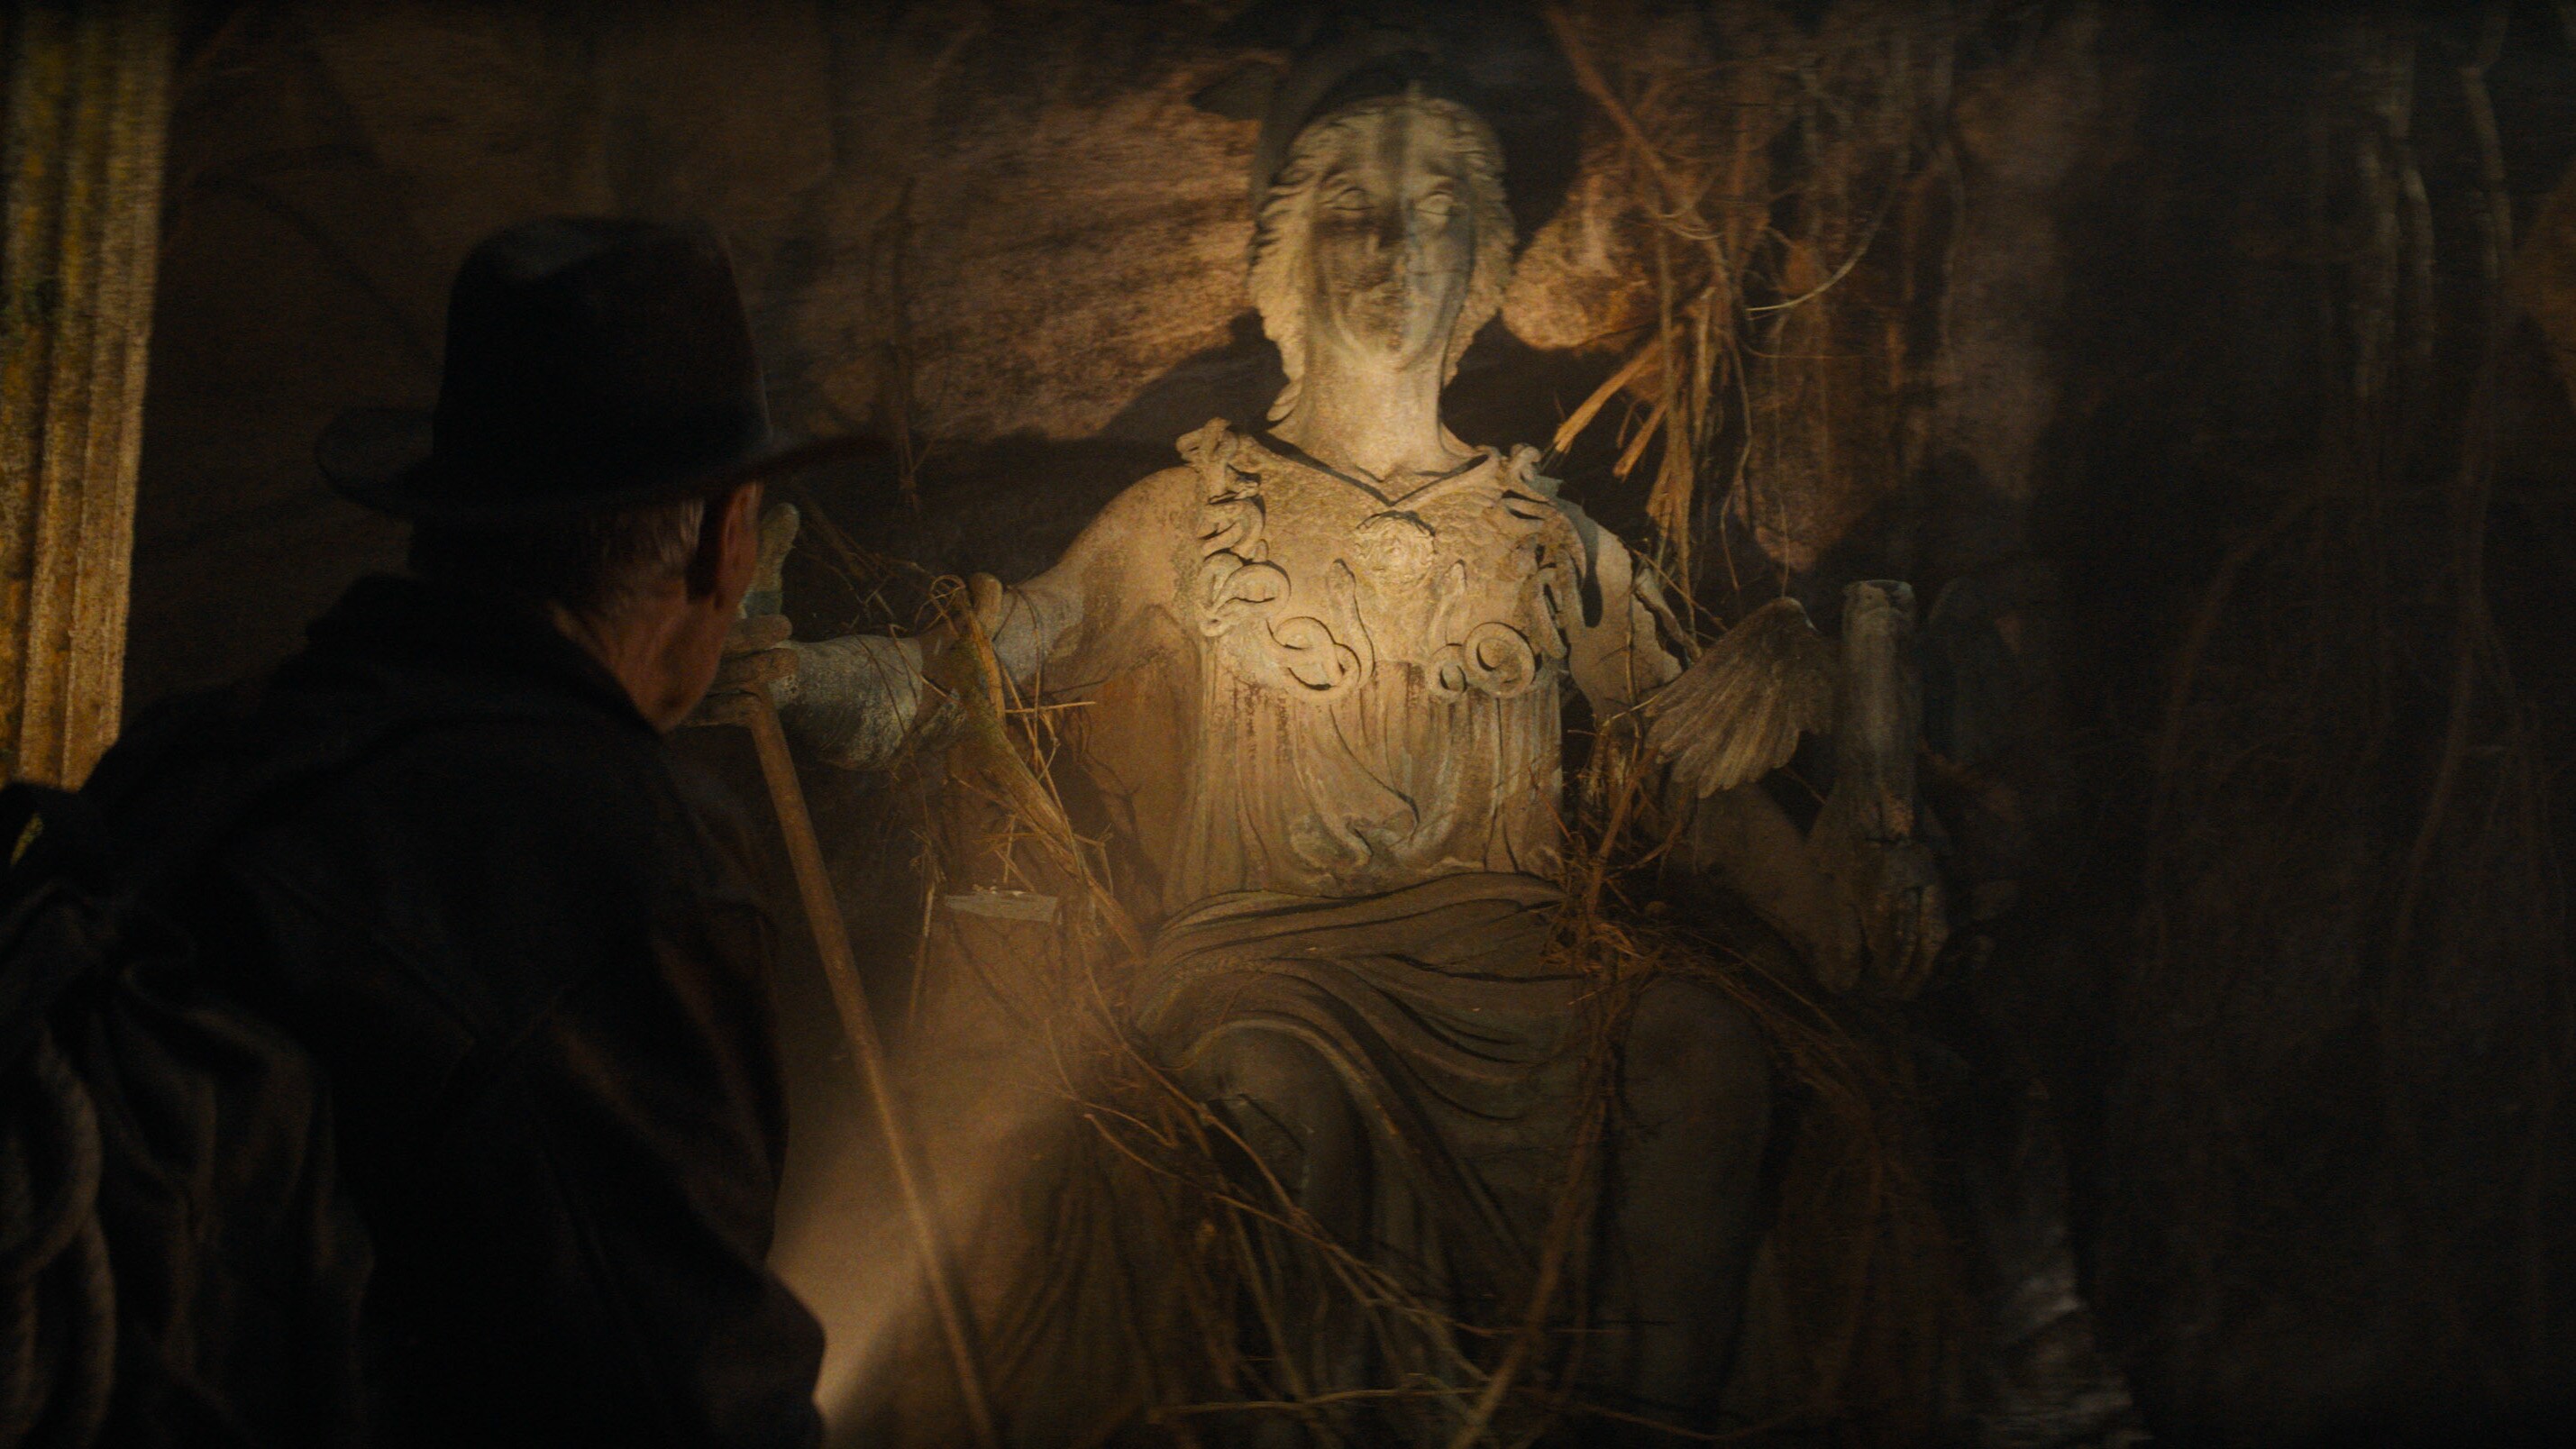 Indiana Jones looking at statue.